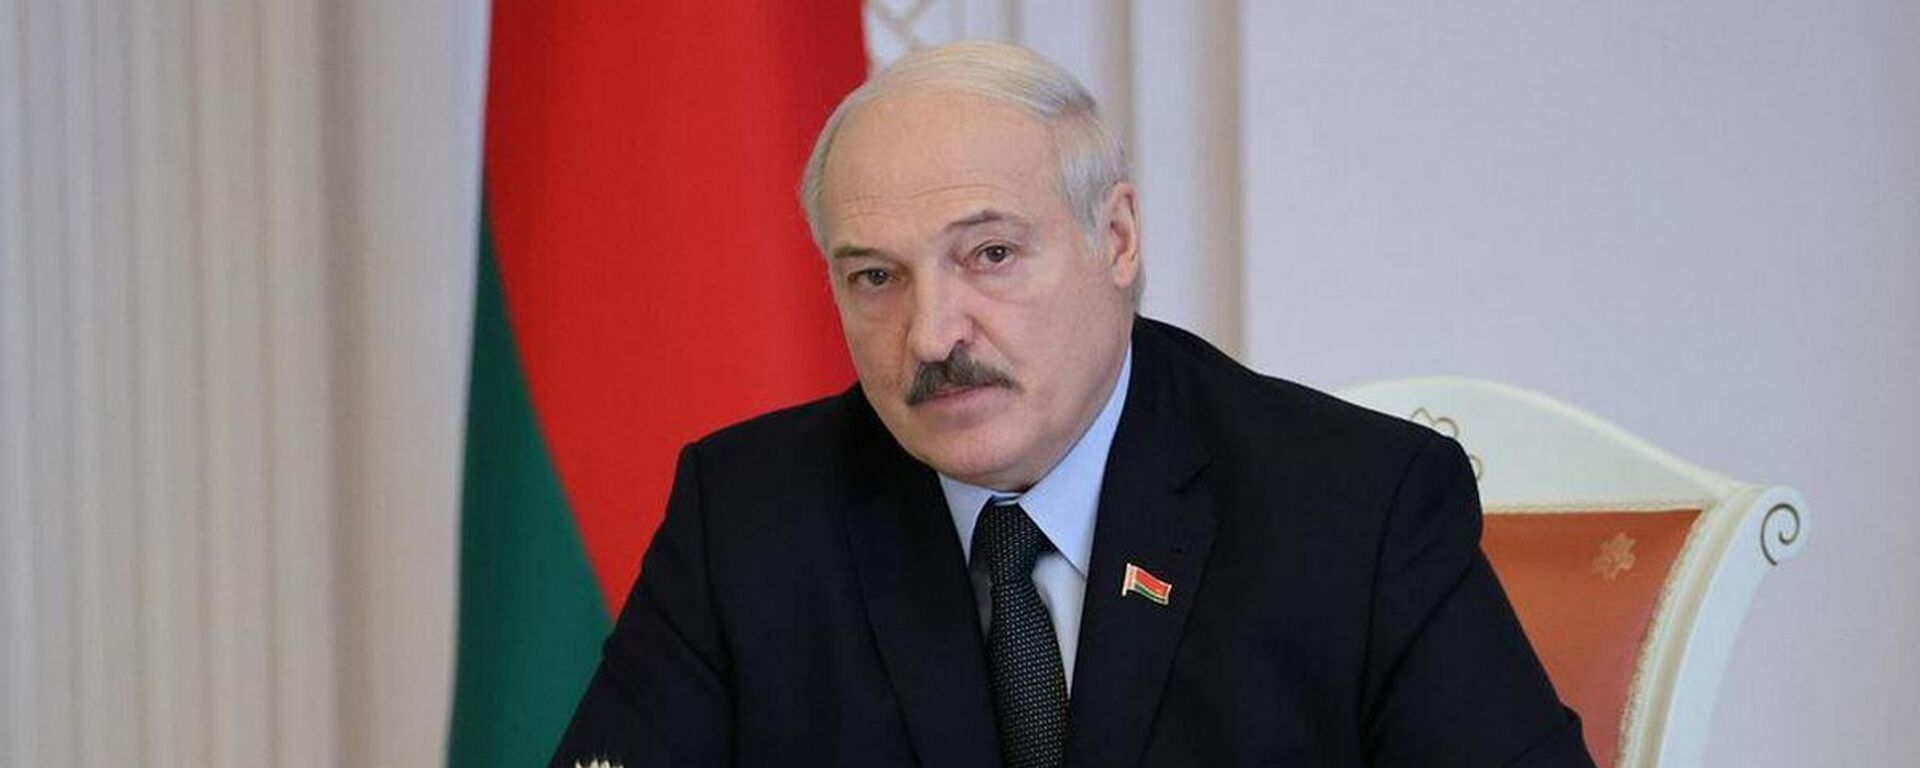 Президент Беларуси Александр Лукашенко - Sputnik Беларусь, 1920, 18.10.2021